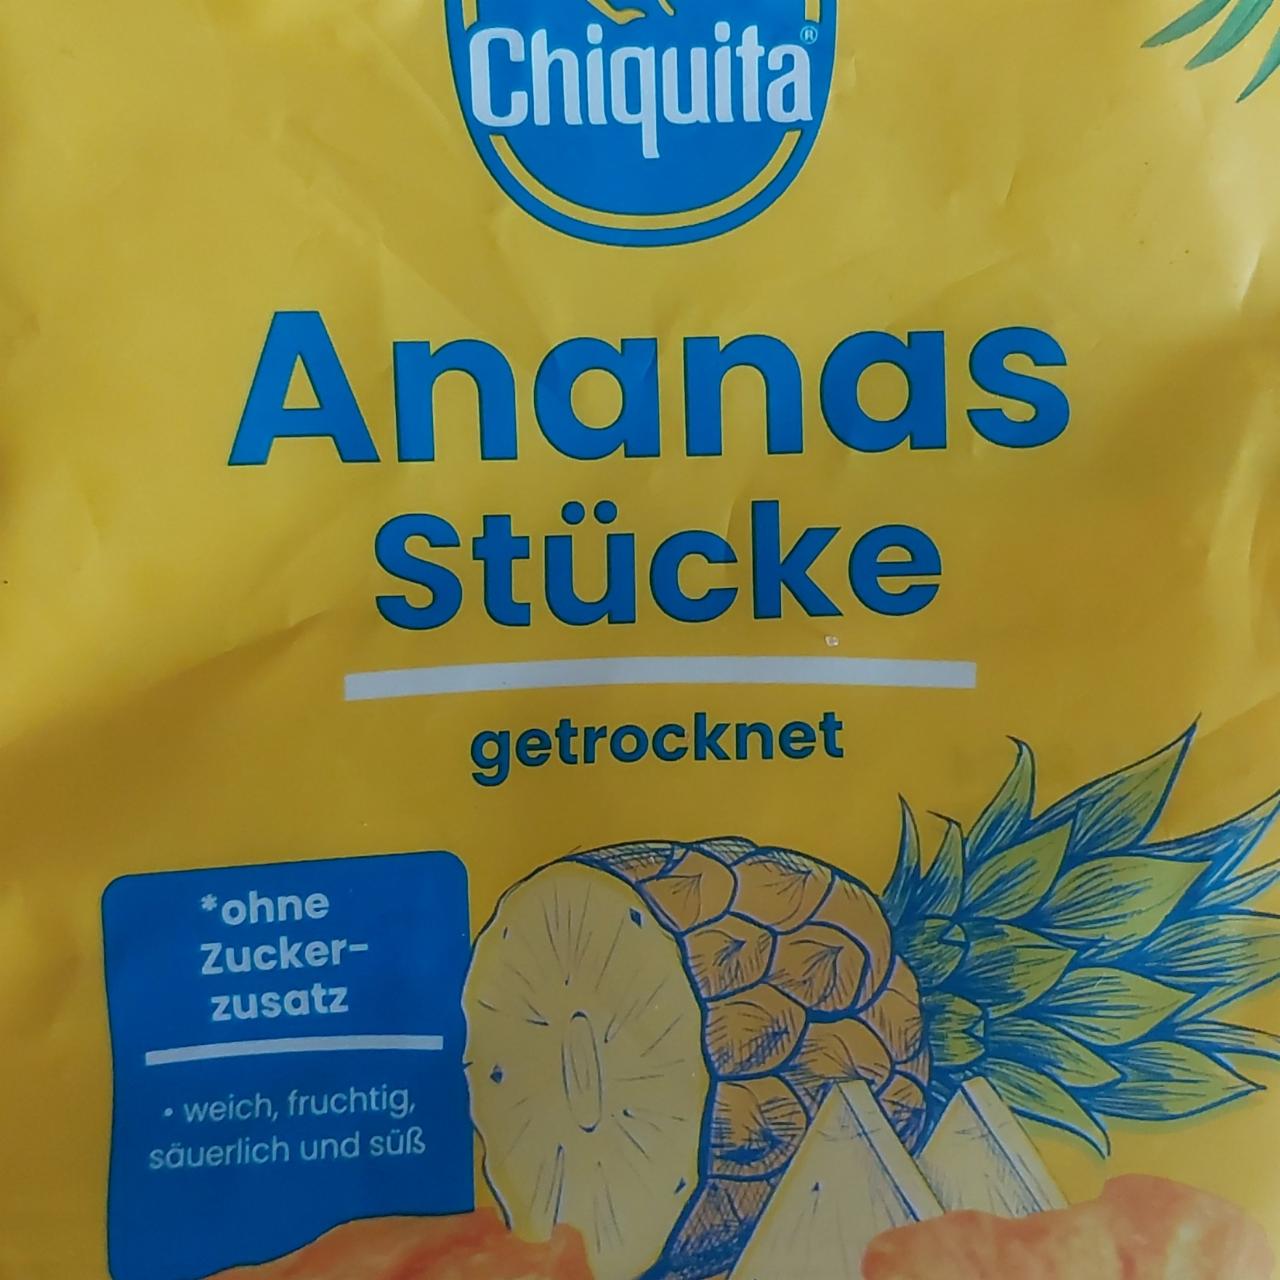 Фото - Ananas Stücke getrocknet Chiquita